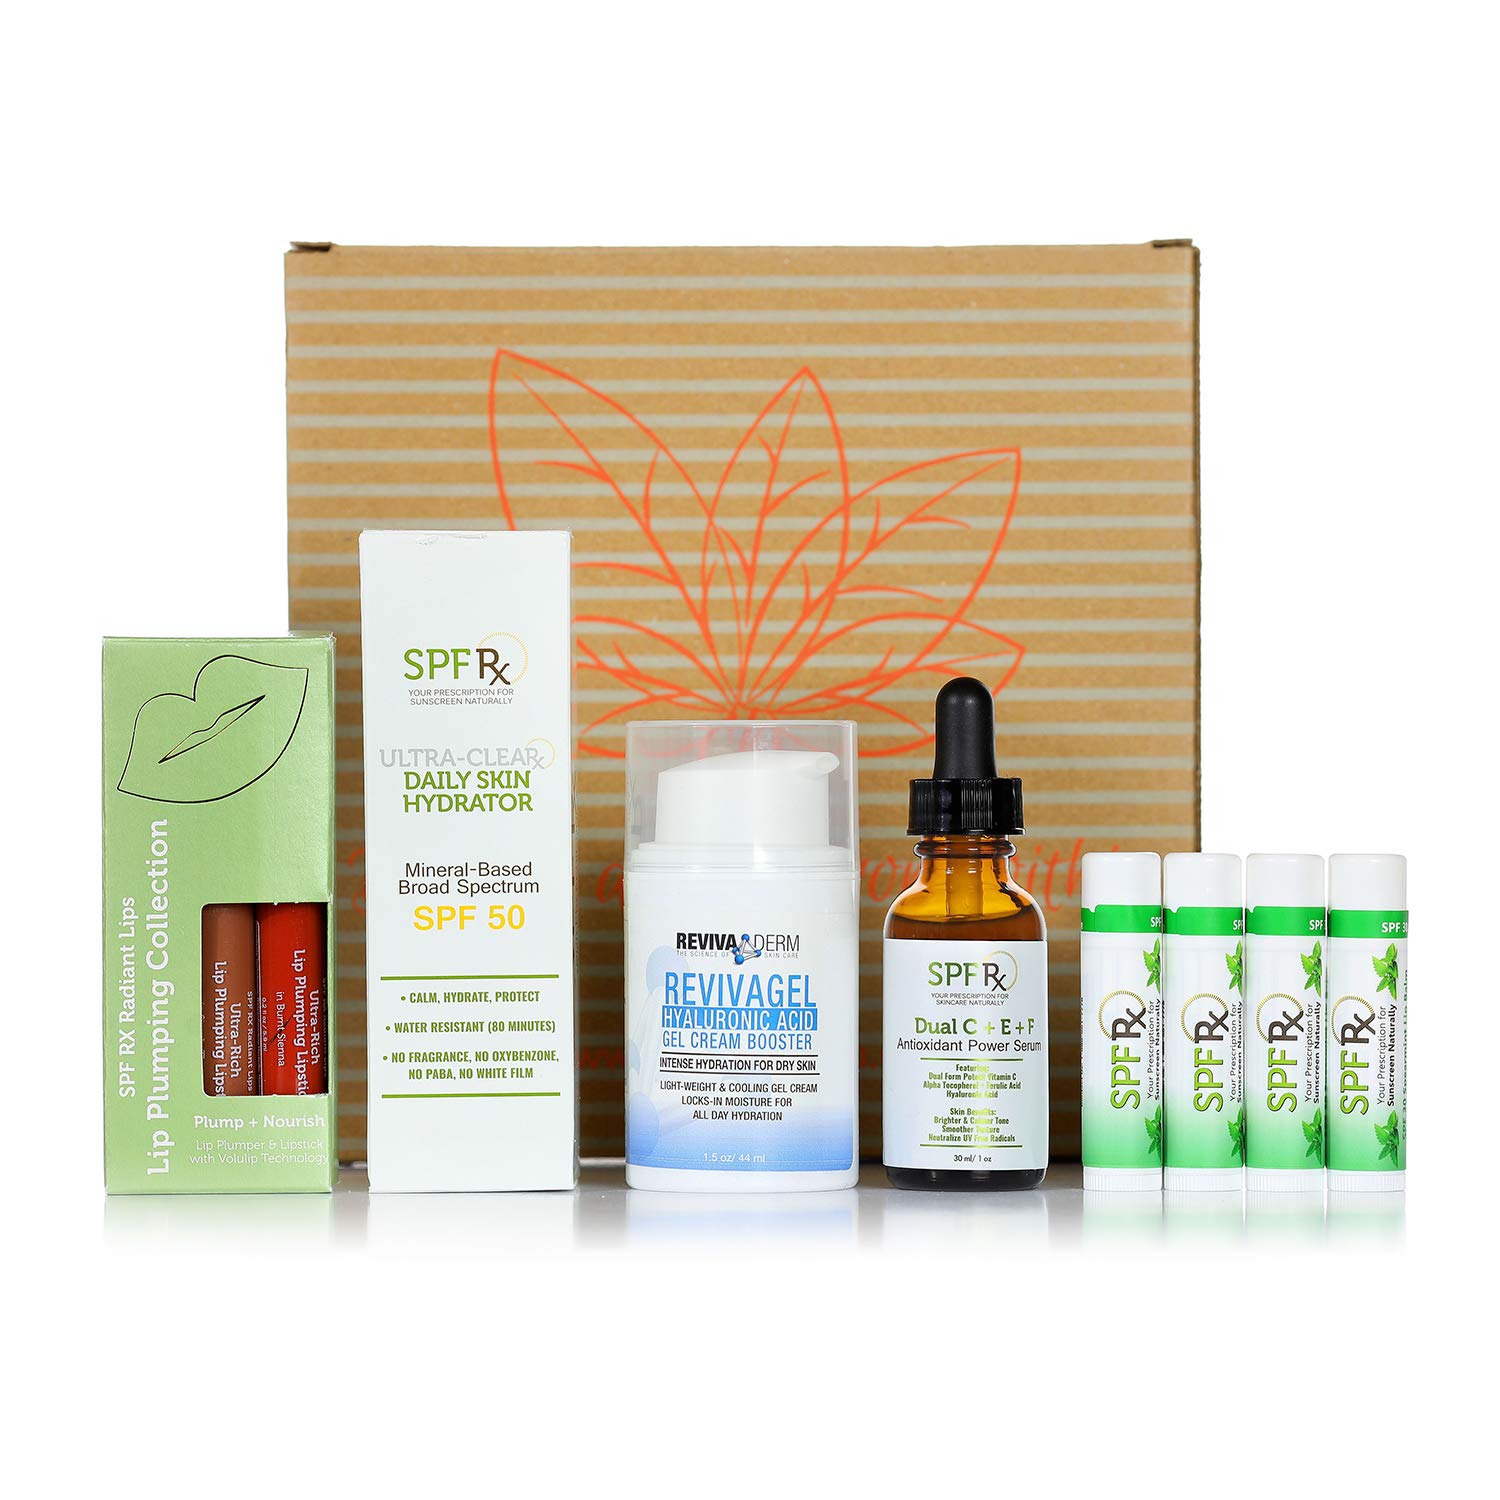 Special! Skin Essentials Gift Set: SPF Rx Herbal Cleanser, Ultra-Clear Daily Skin Hydrator w/Broad Spectrum Mineral SPF 50, Anti-Oxidant Power Seru...